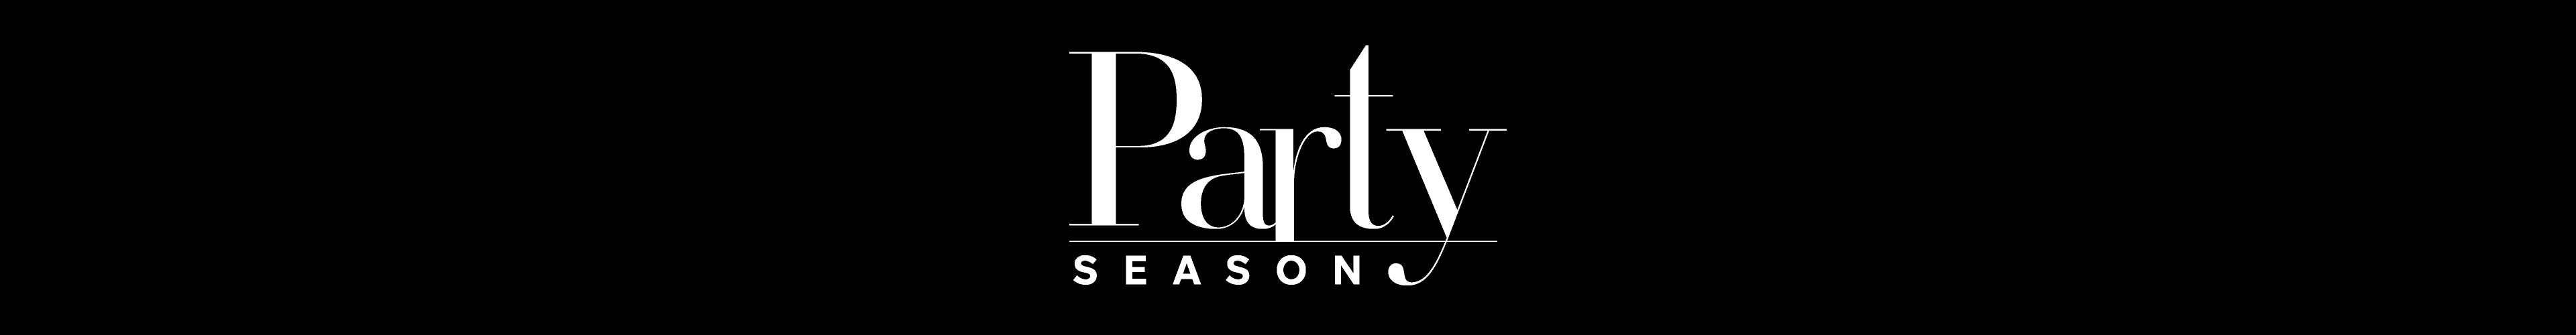 party season